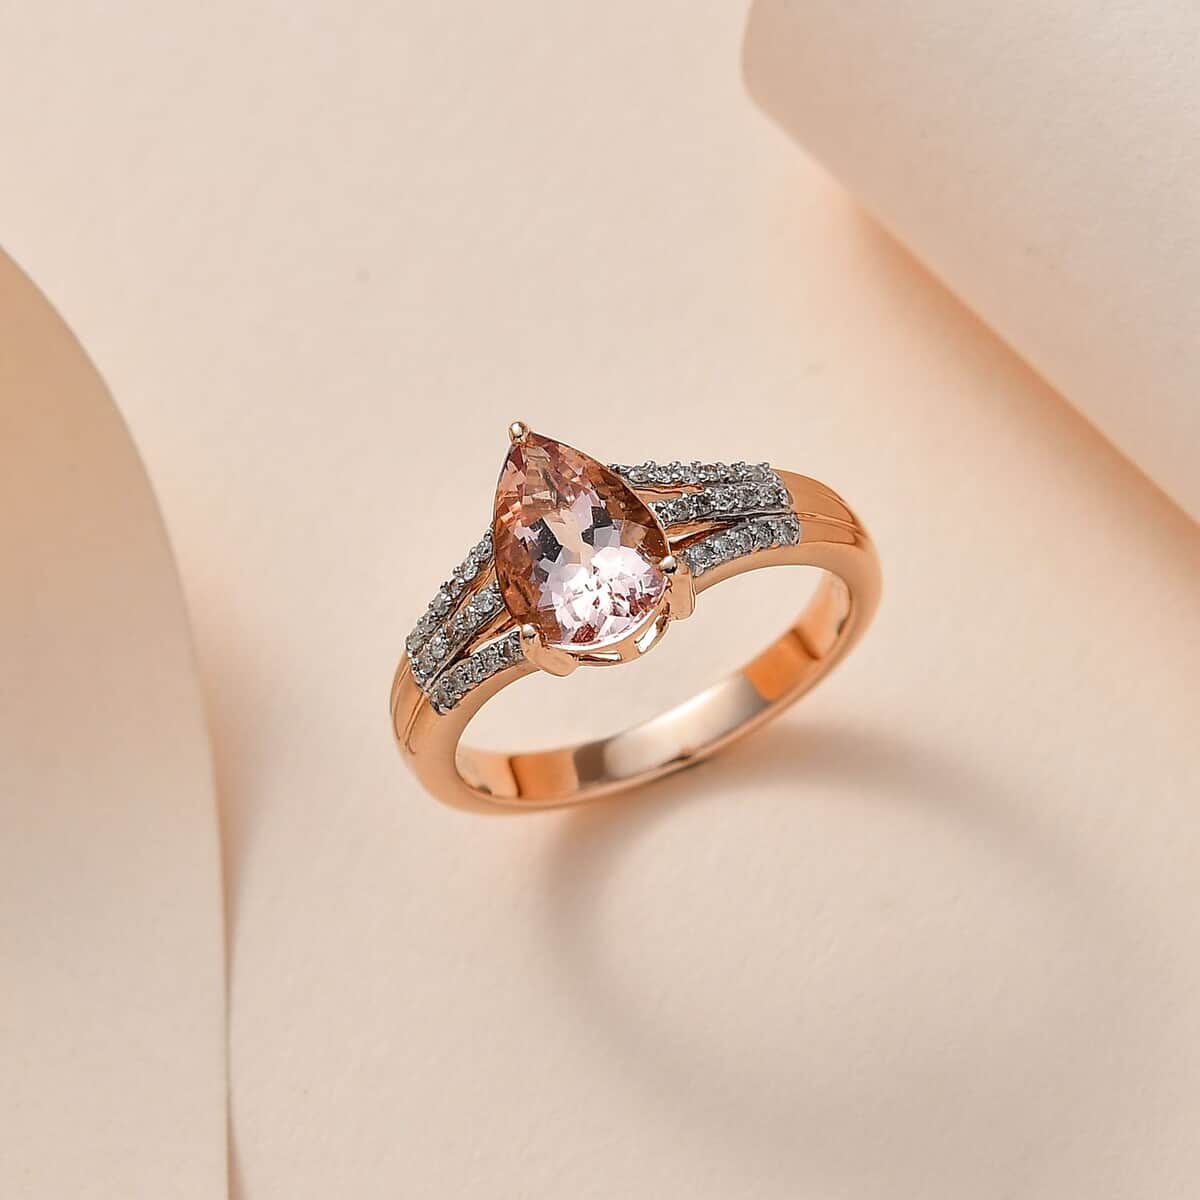 Luxoro 10K Rose Gold Premium Pink Morganite and Diamond Ring (Size 6.0) 1.75 ctw image number 1